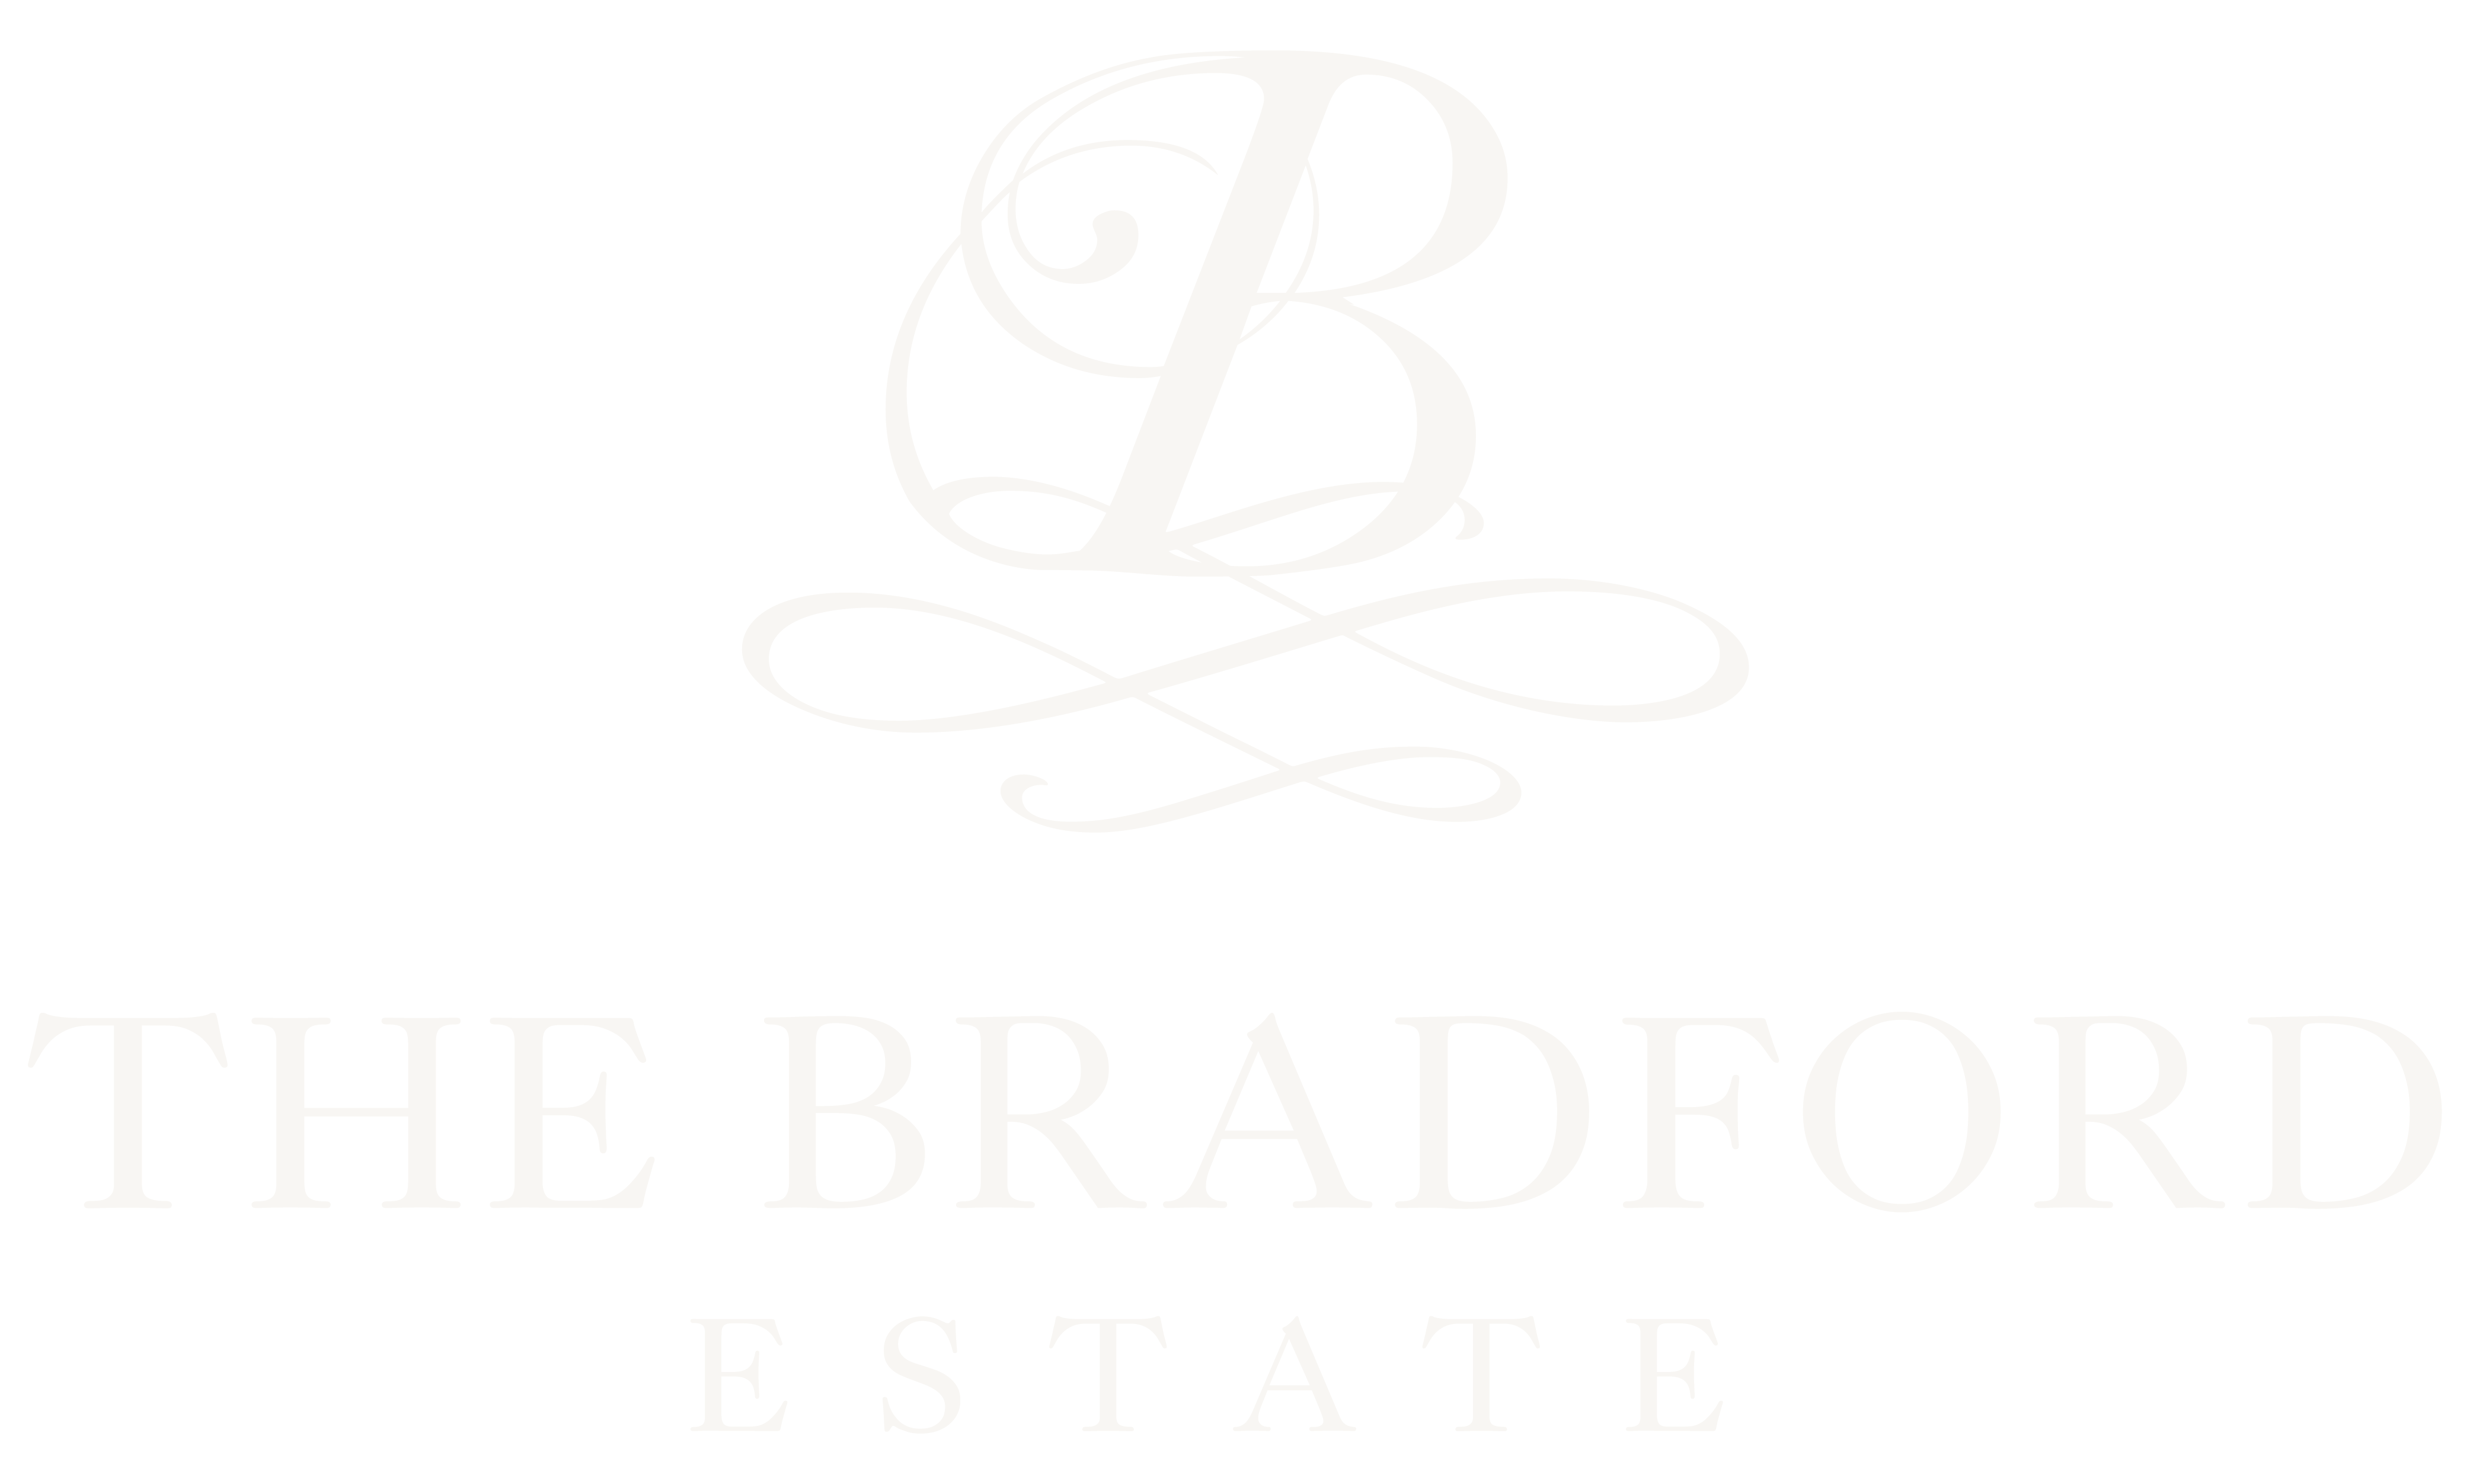 The Bradford Estate Logo